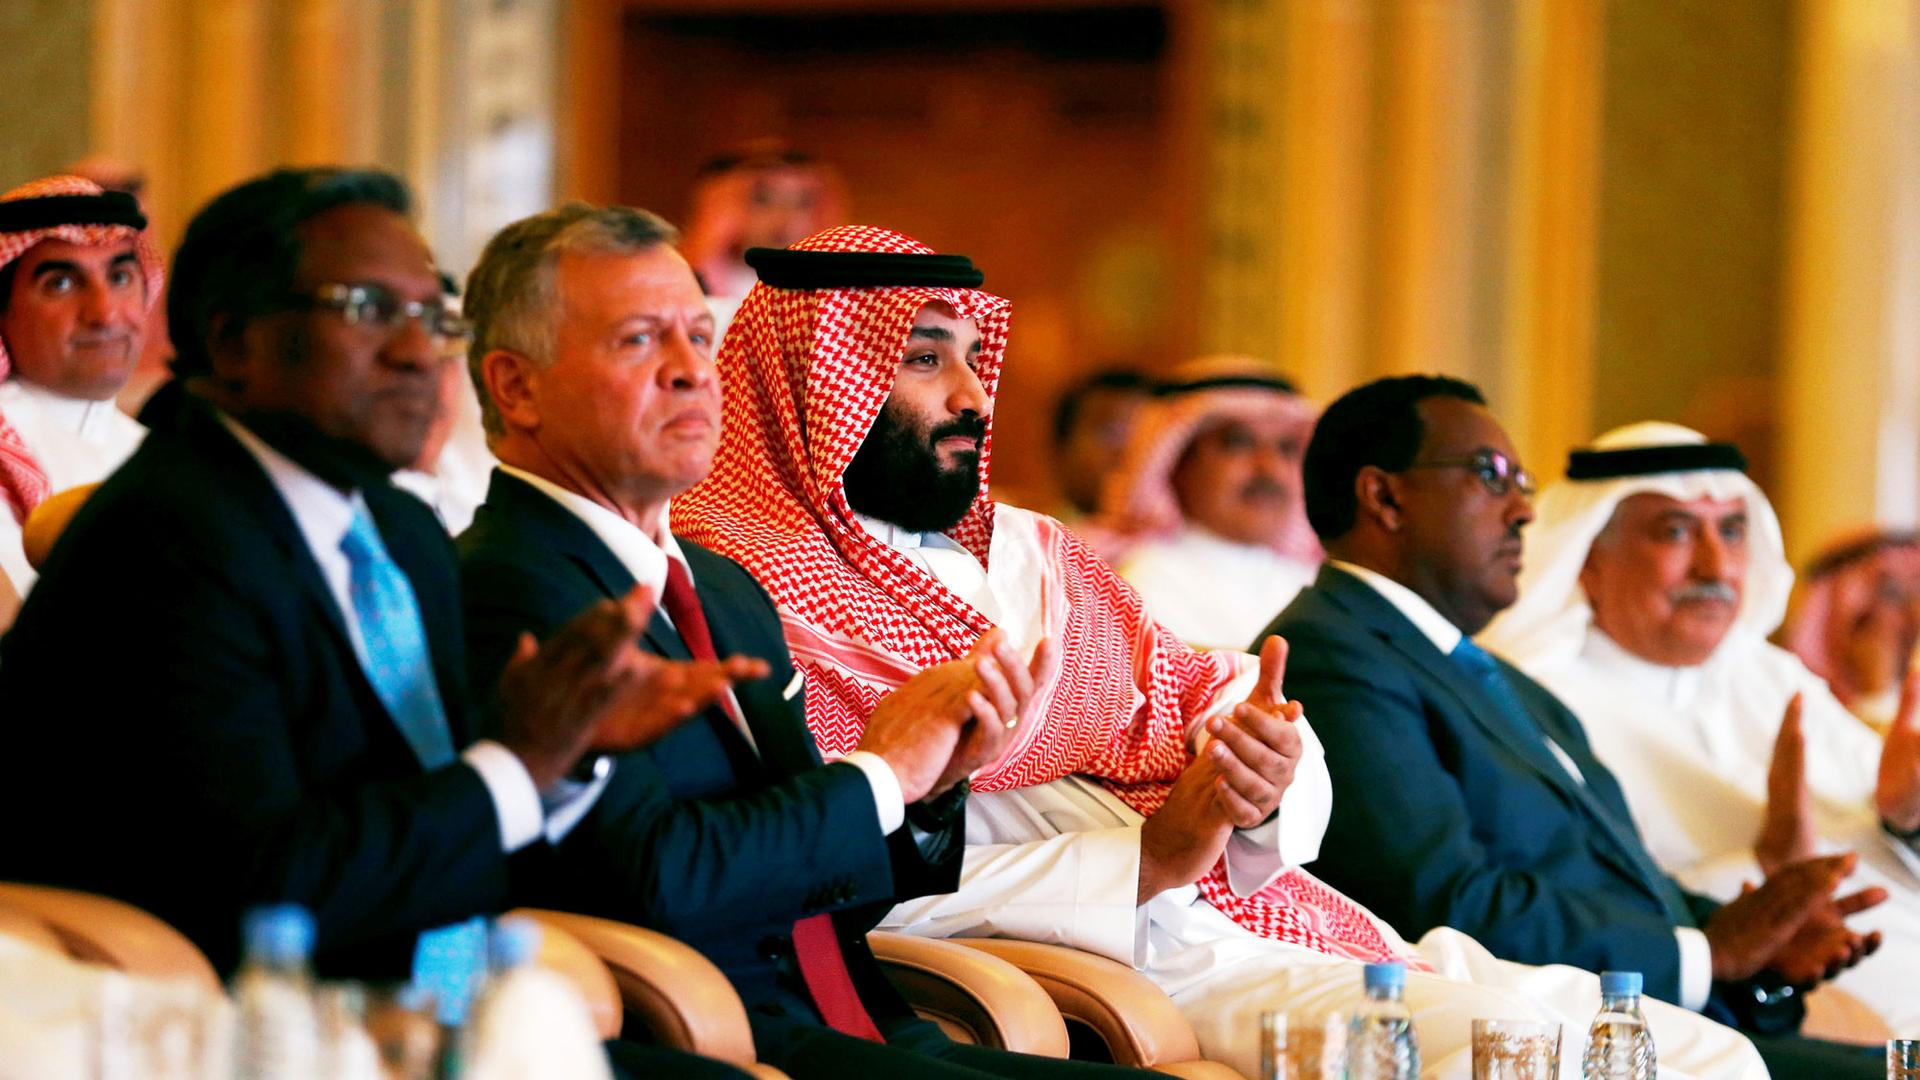 Saudi Crown Prince Mohammed bin Salman (center) is shown sitting in a row along with Jordan's King Abdullah II ibn Al Hussein.